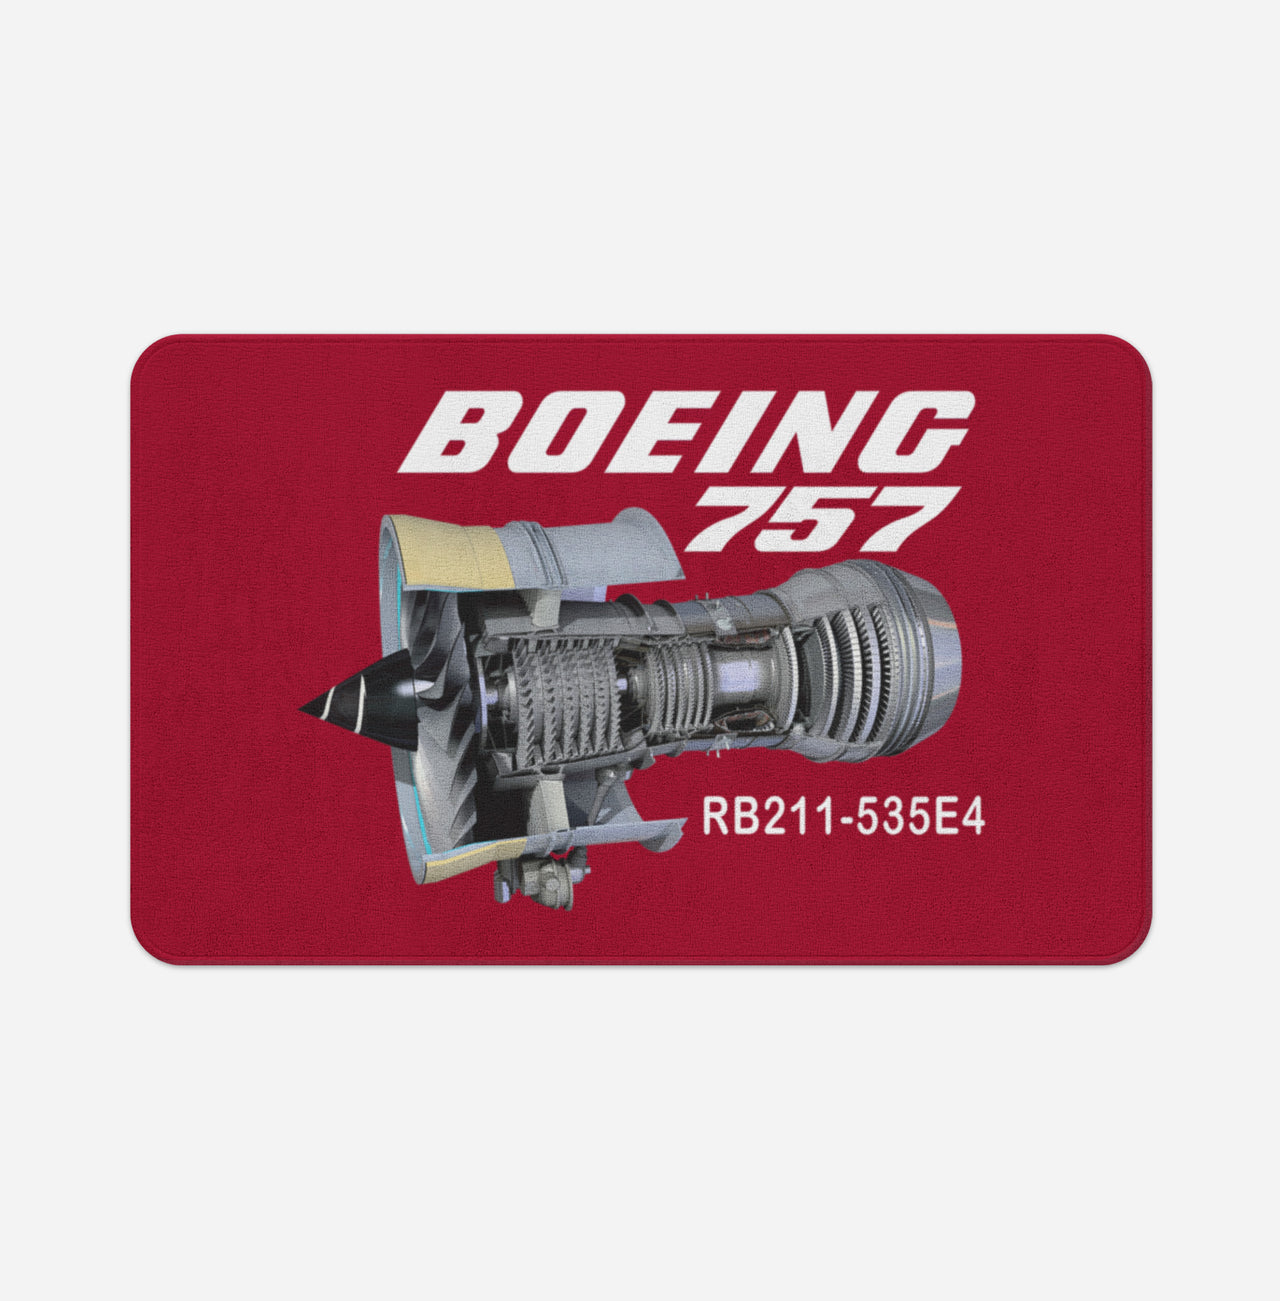 Boeing 757 & Rolls Royce Engine (RB211) Designed Bath Mats